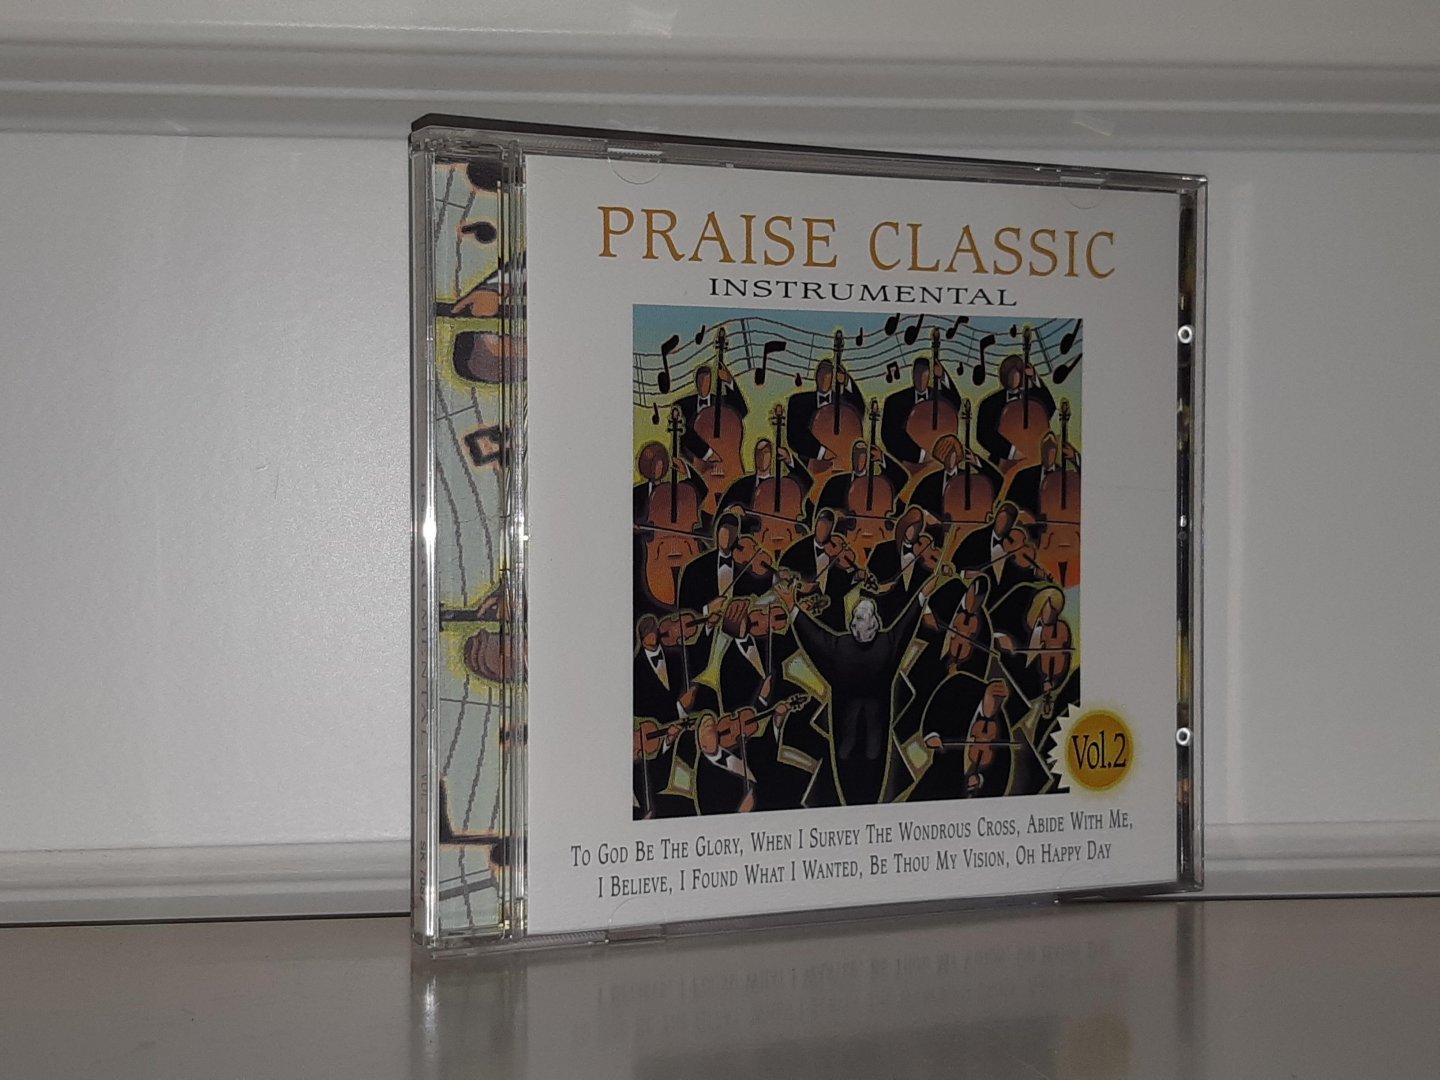  - Praise Classic Instrumental. Volume 2